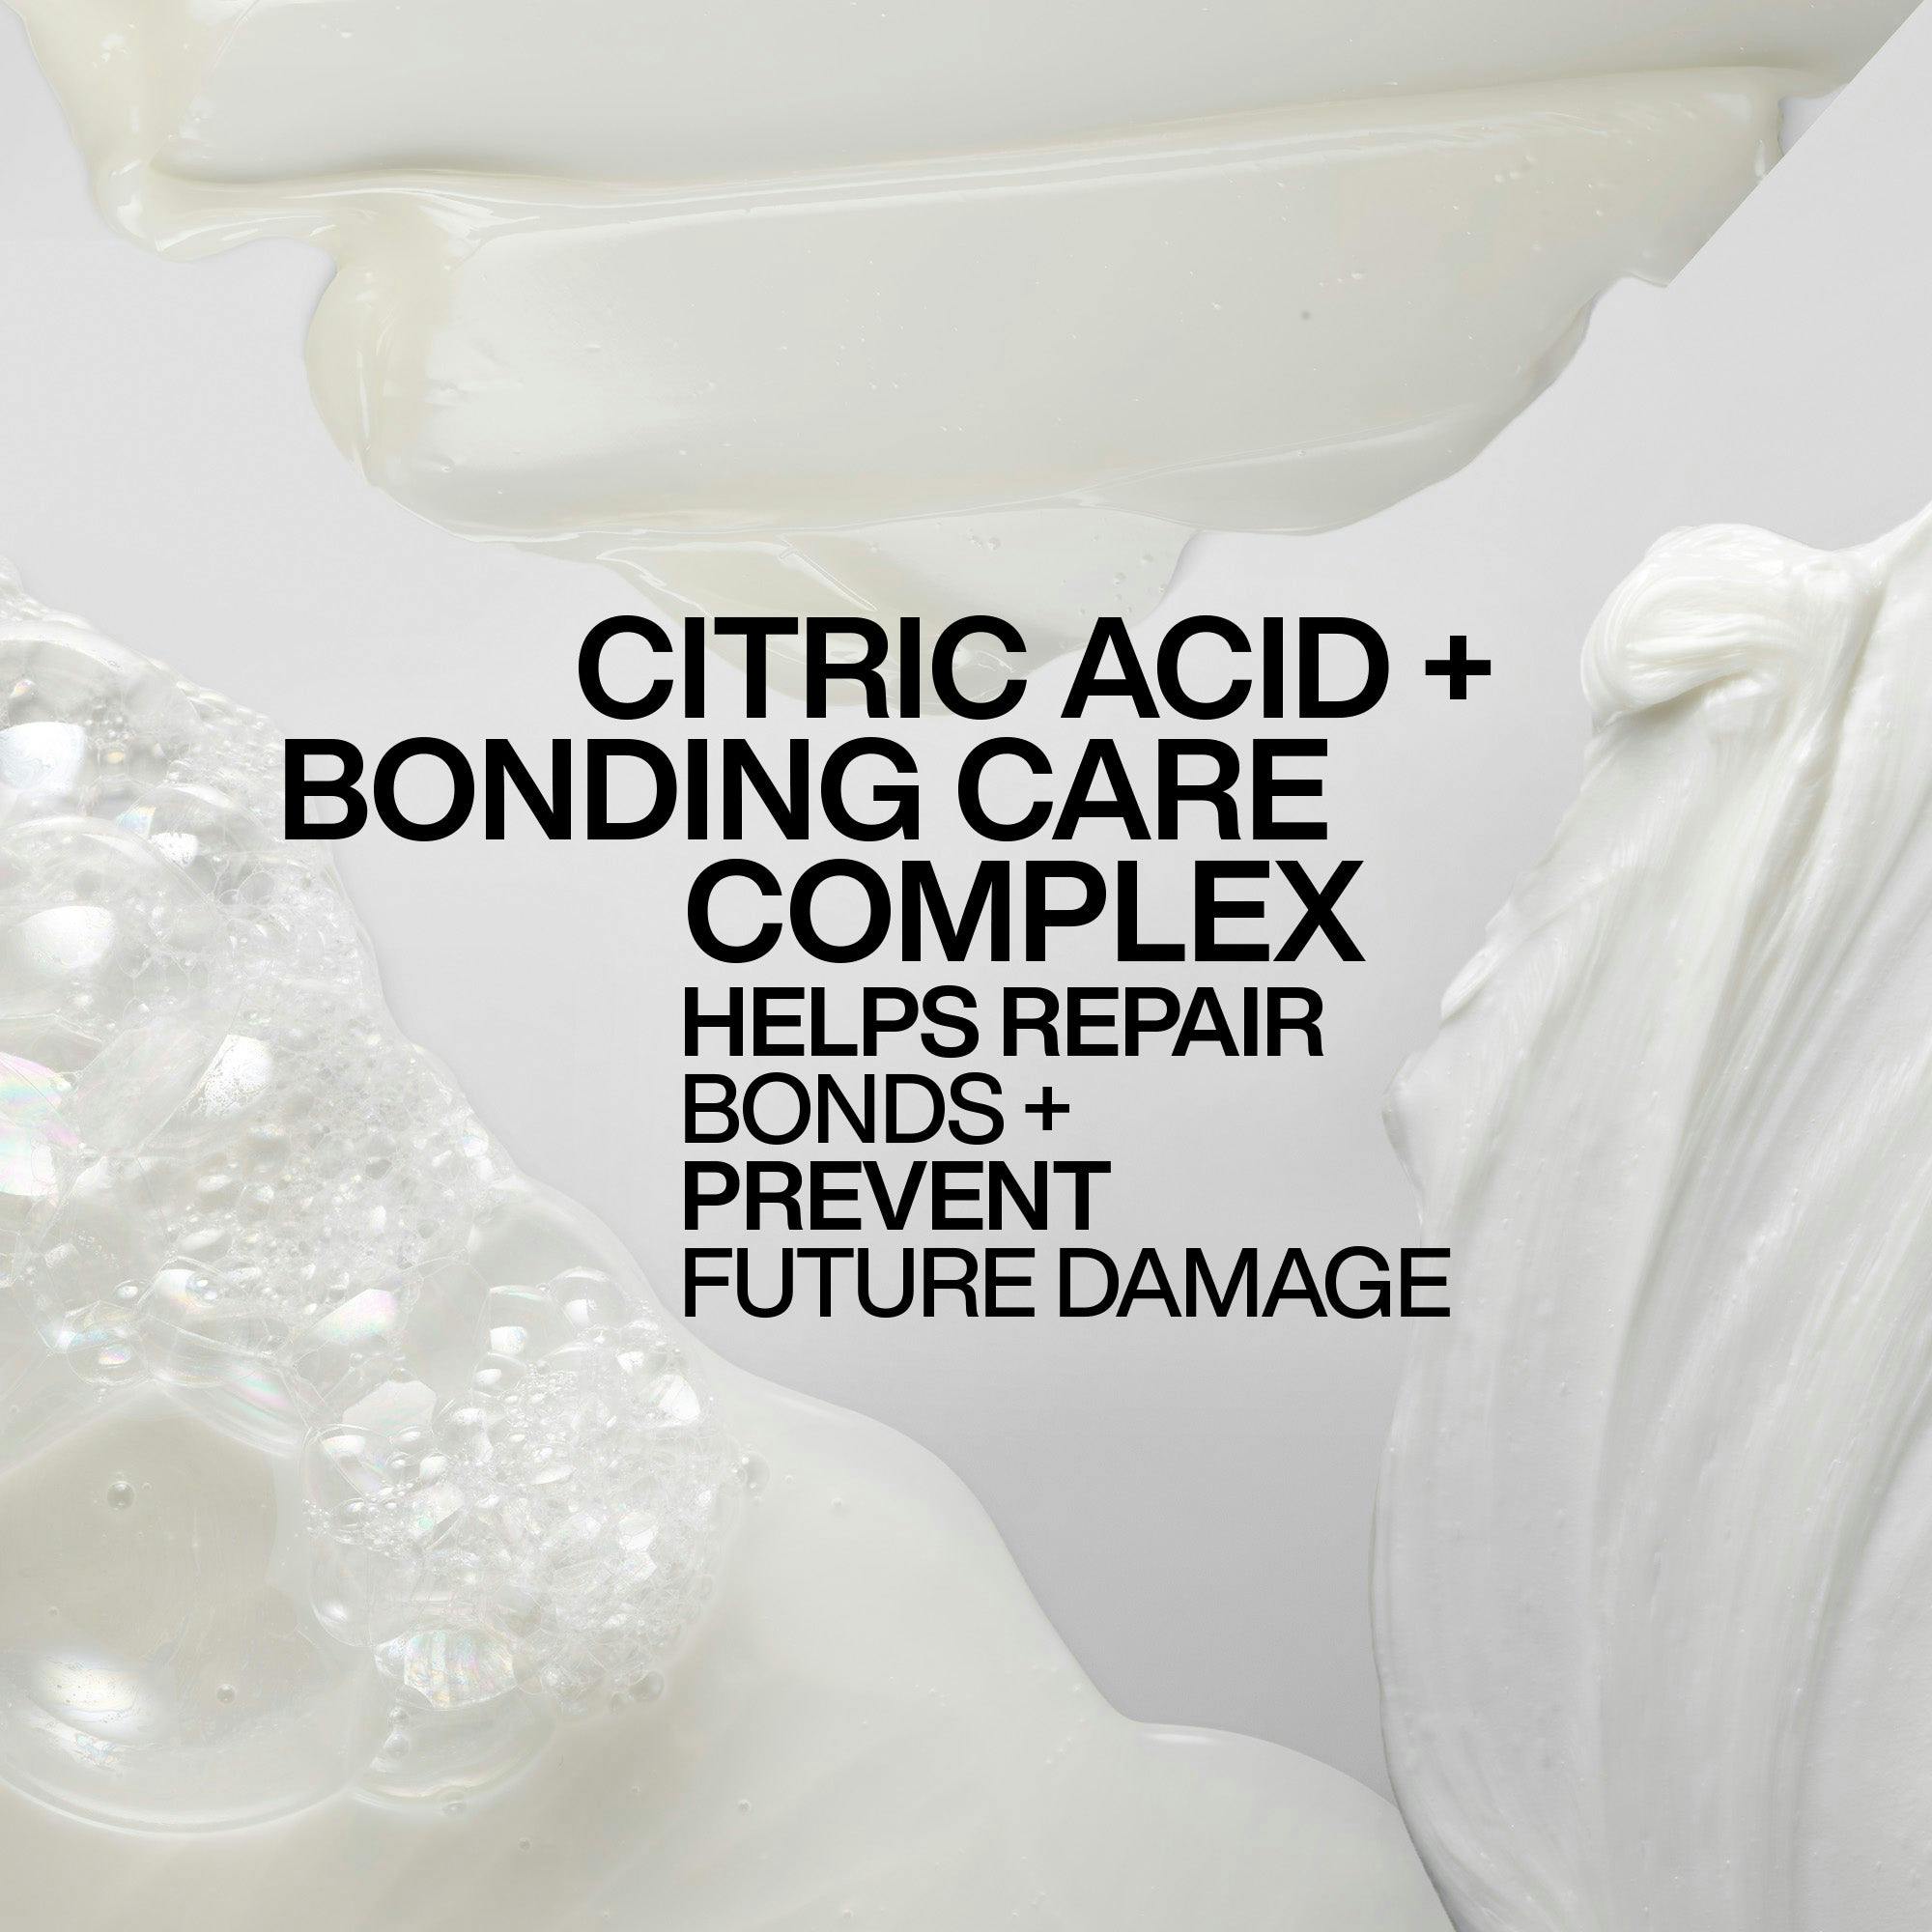 Redken Acidic Bonding Concentrate Shampoo and Conditioner 500ml Bundle